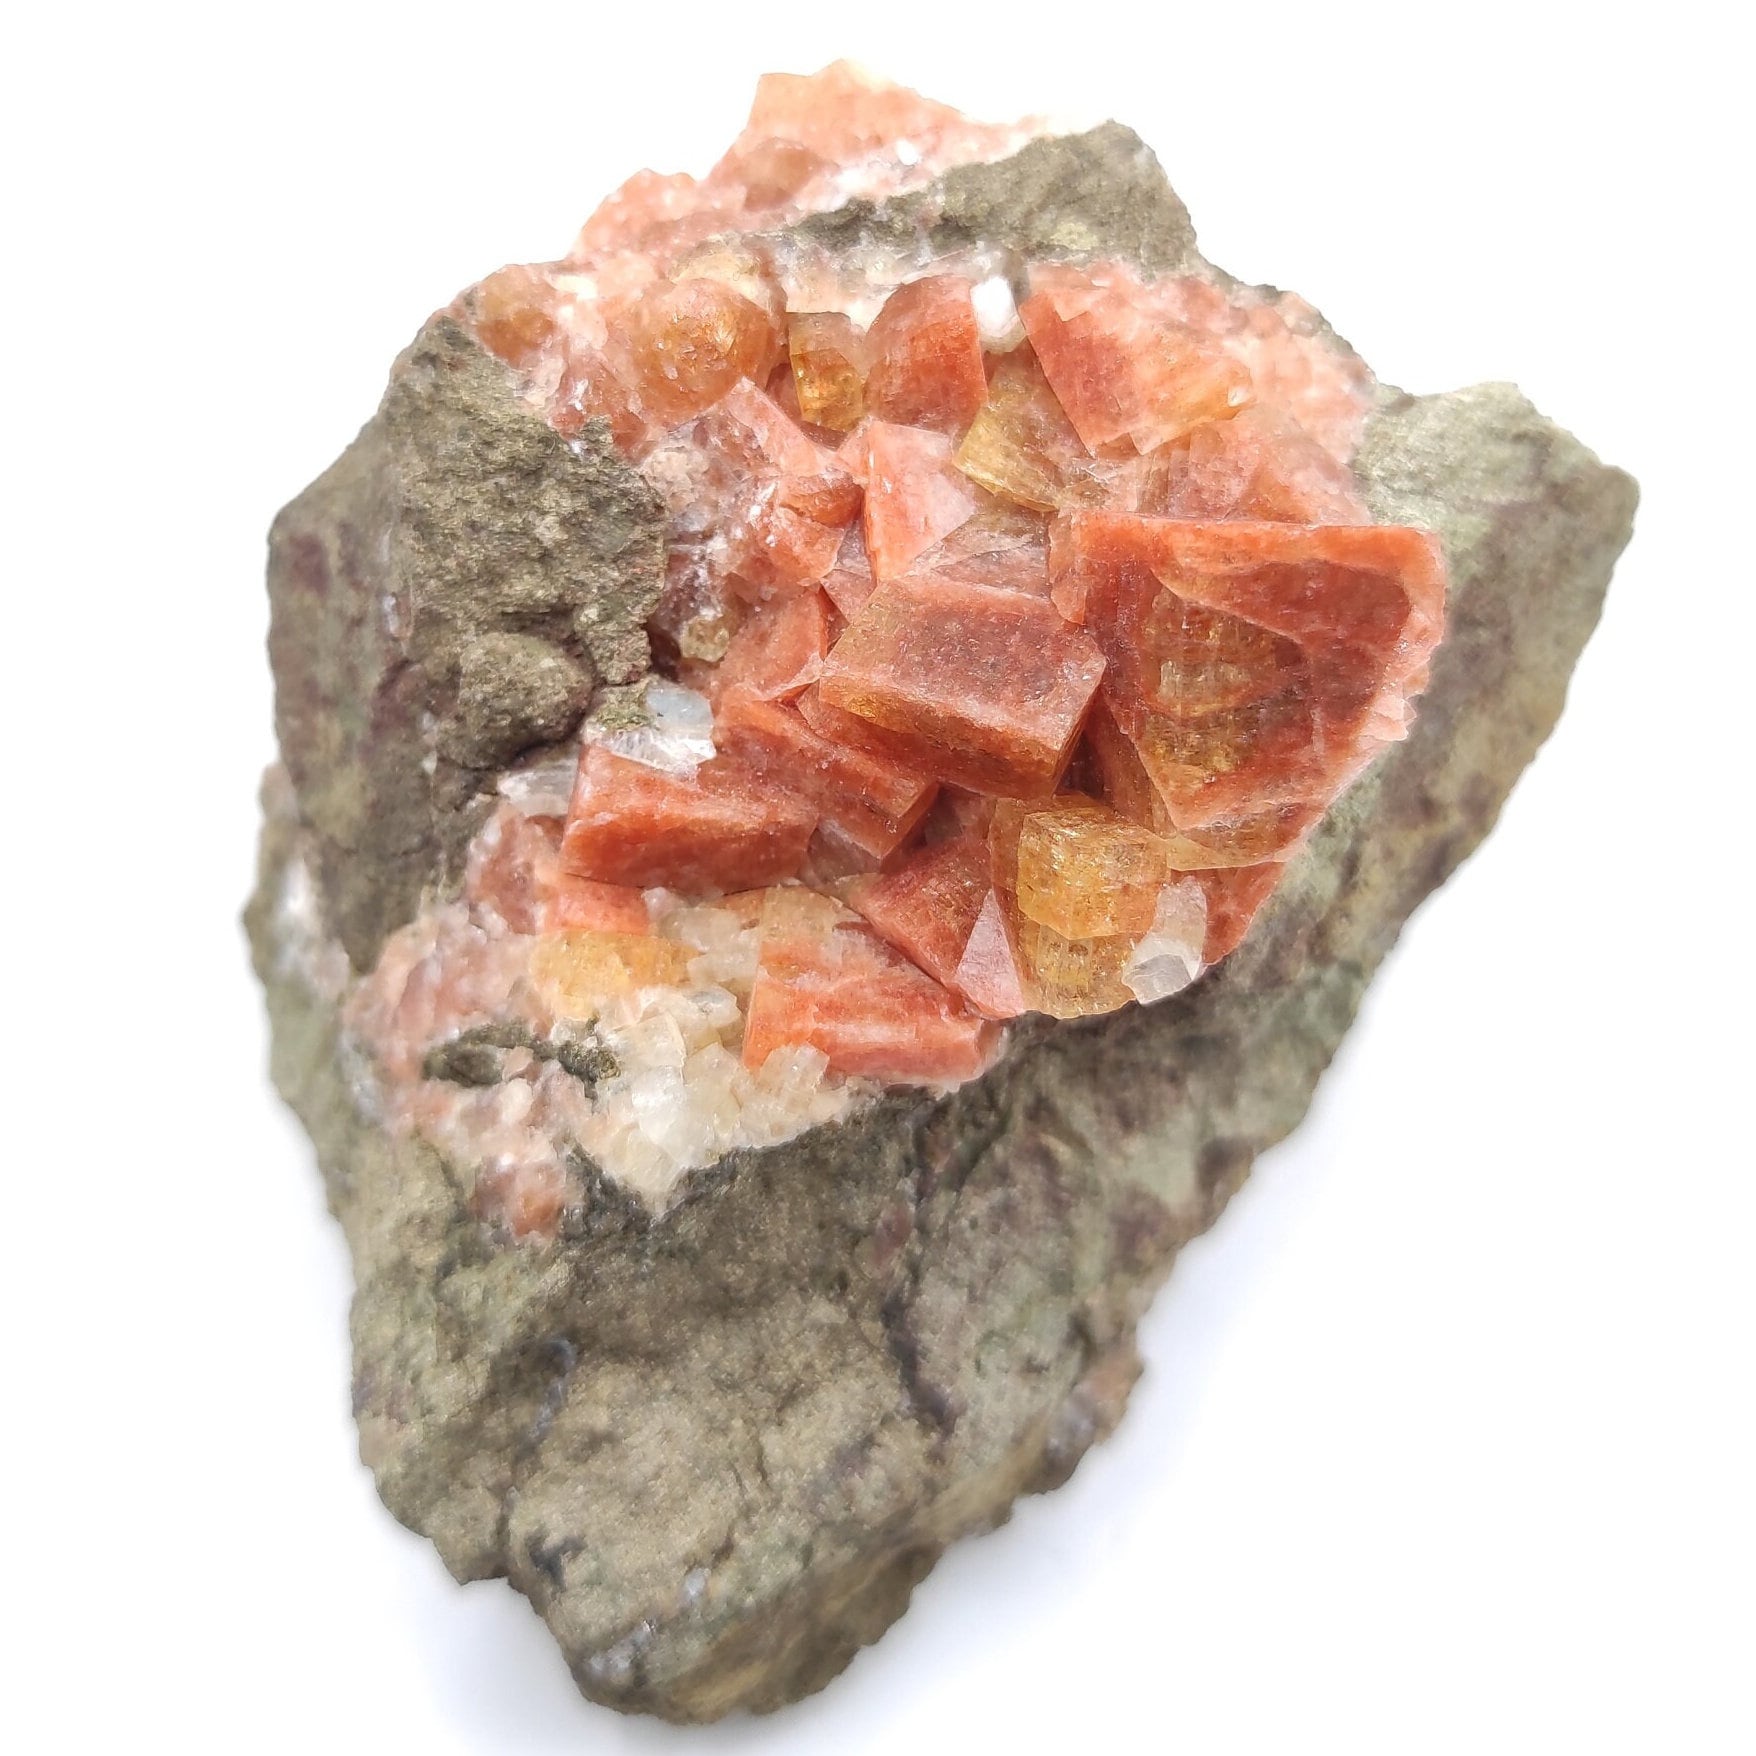 181g Chabazite Specimen - Wasson Bluff, Parrsboro, Nova Scotia - Orange Chabazite Crystal Specimen - High Quality Chabazite from Canada